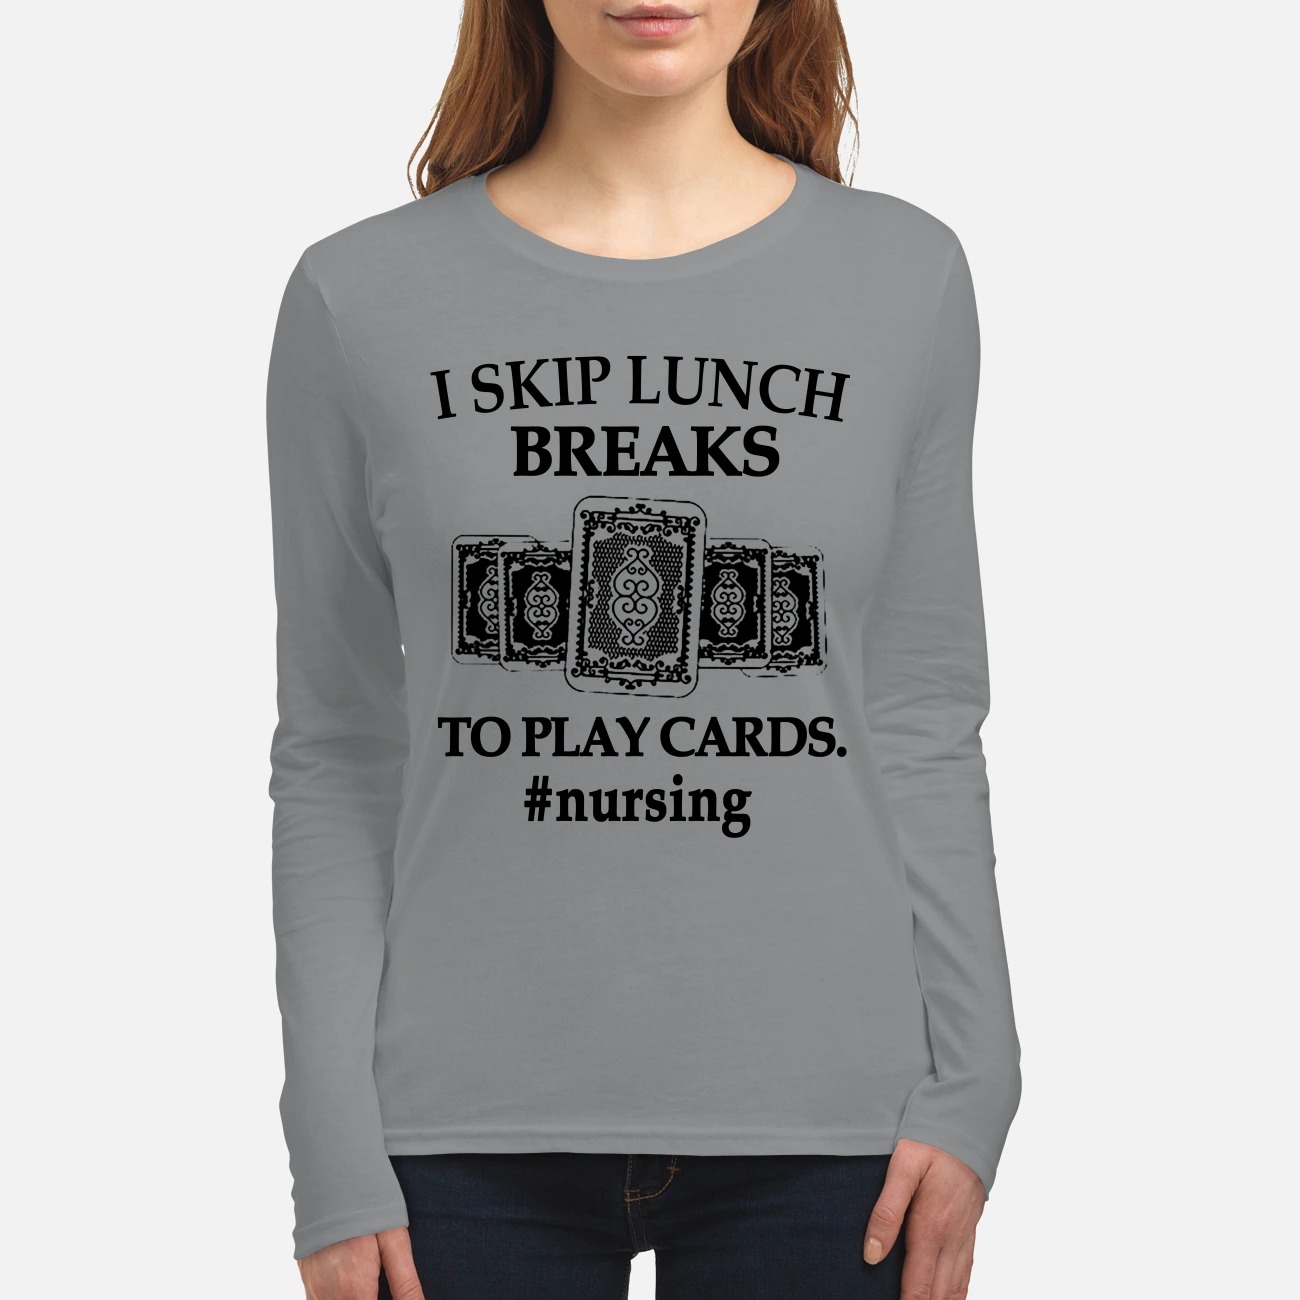 I skip lunch breaks to play cards nursing women's long sleeved shirt